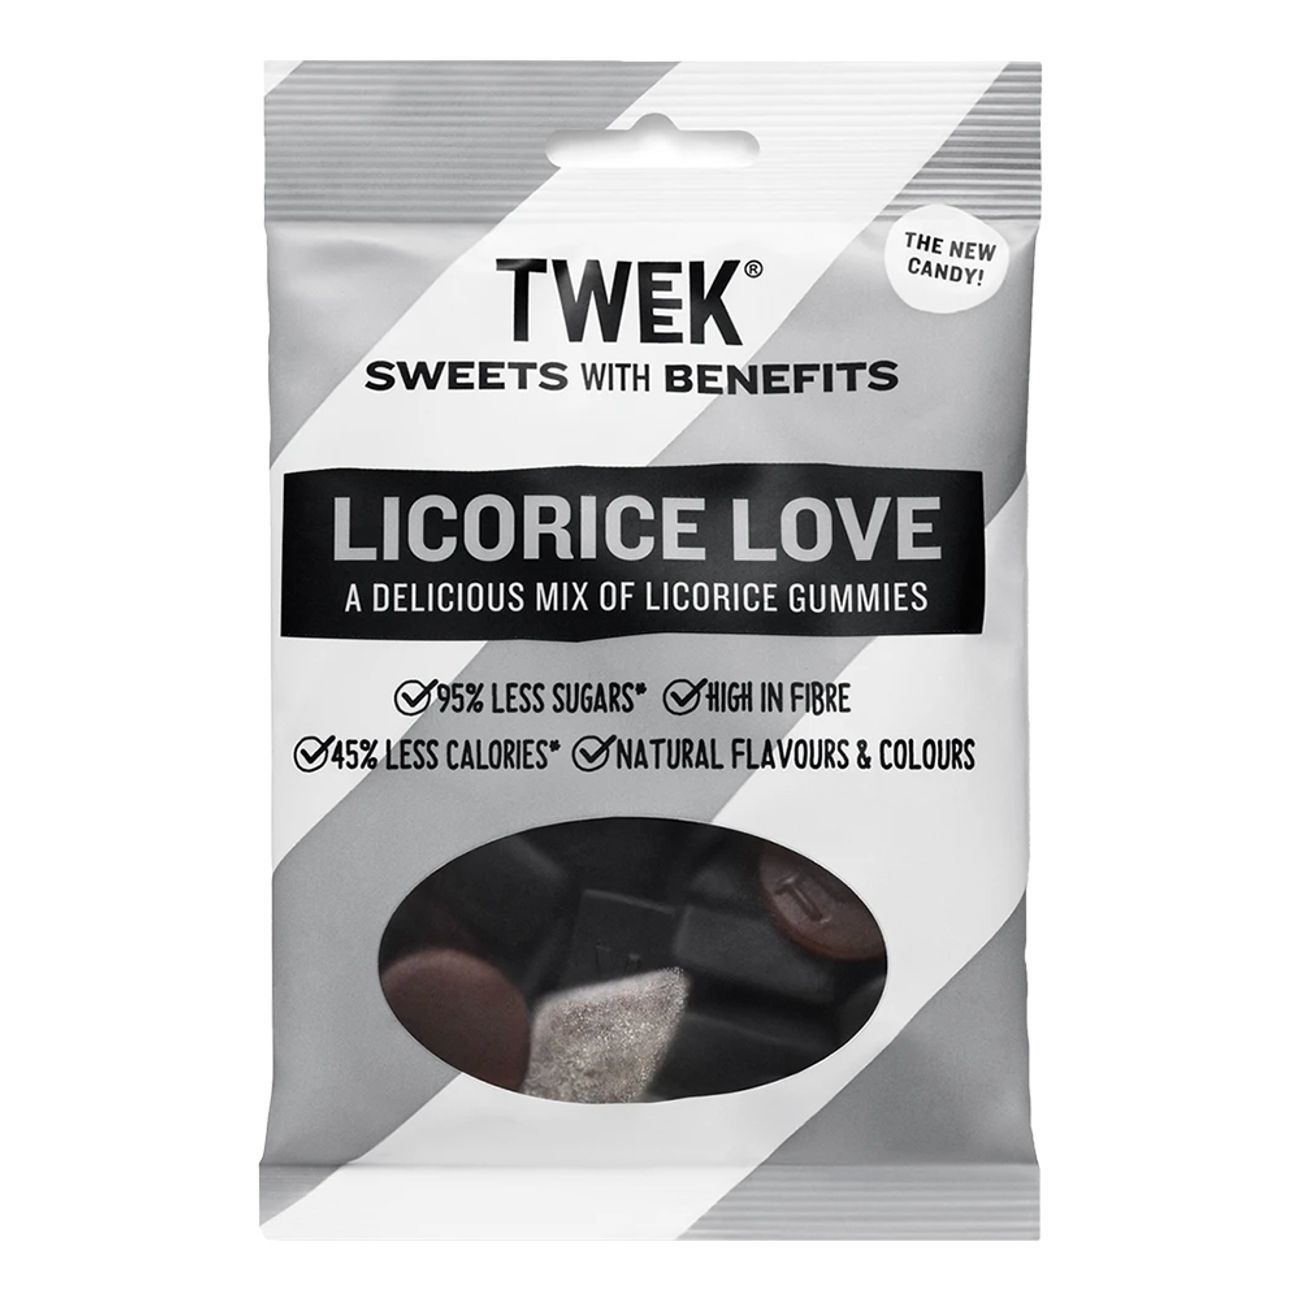 tweek-licorice-love-92756-1